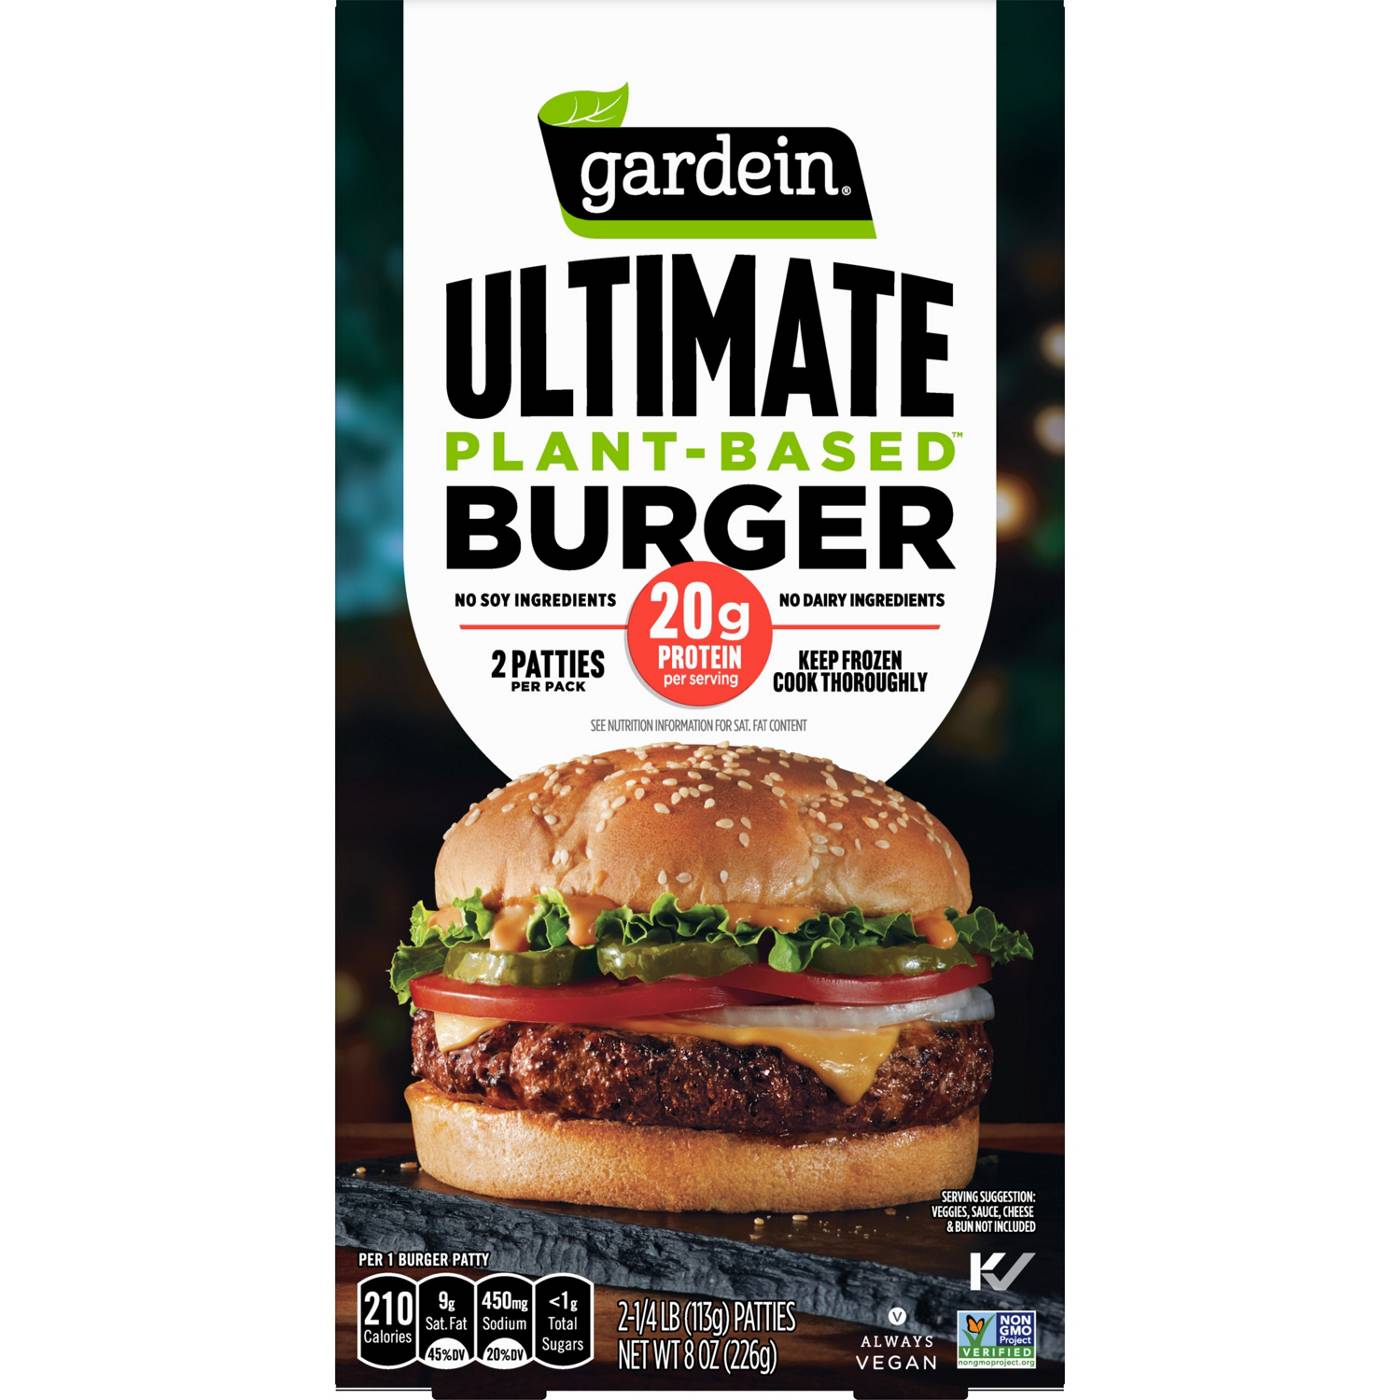 Gardein Ultimate Plant-Based Vegan Burger; image 7 of 7